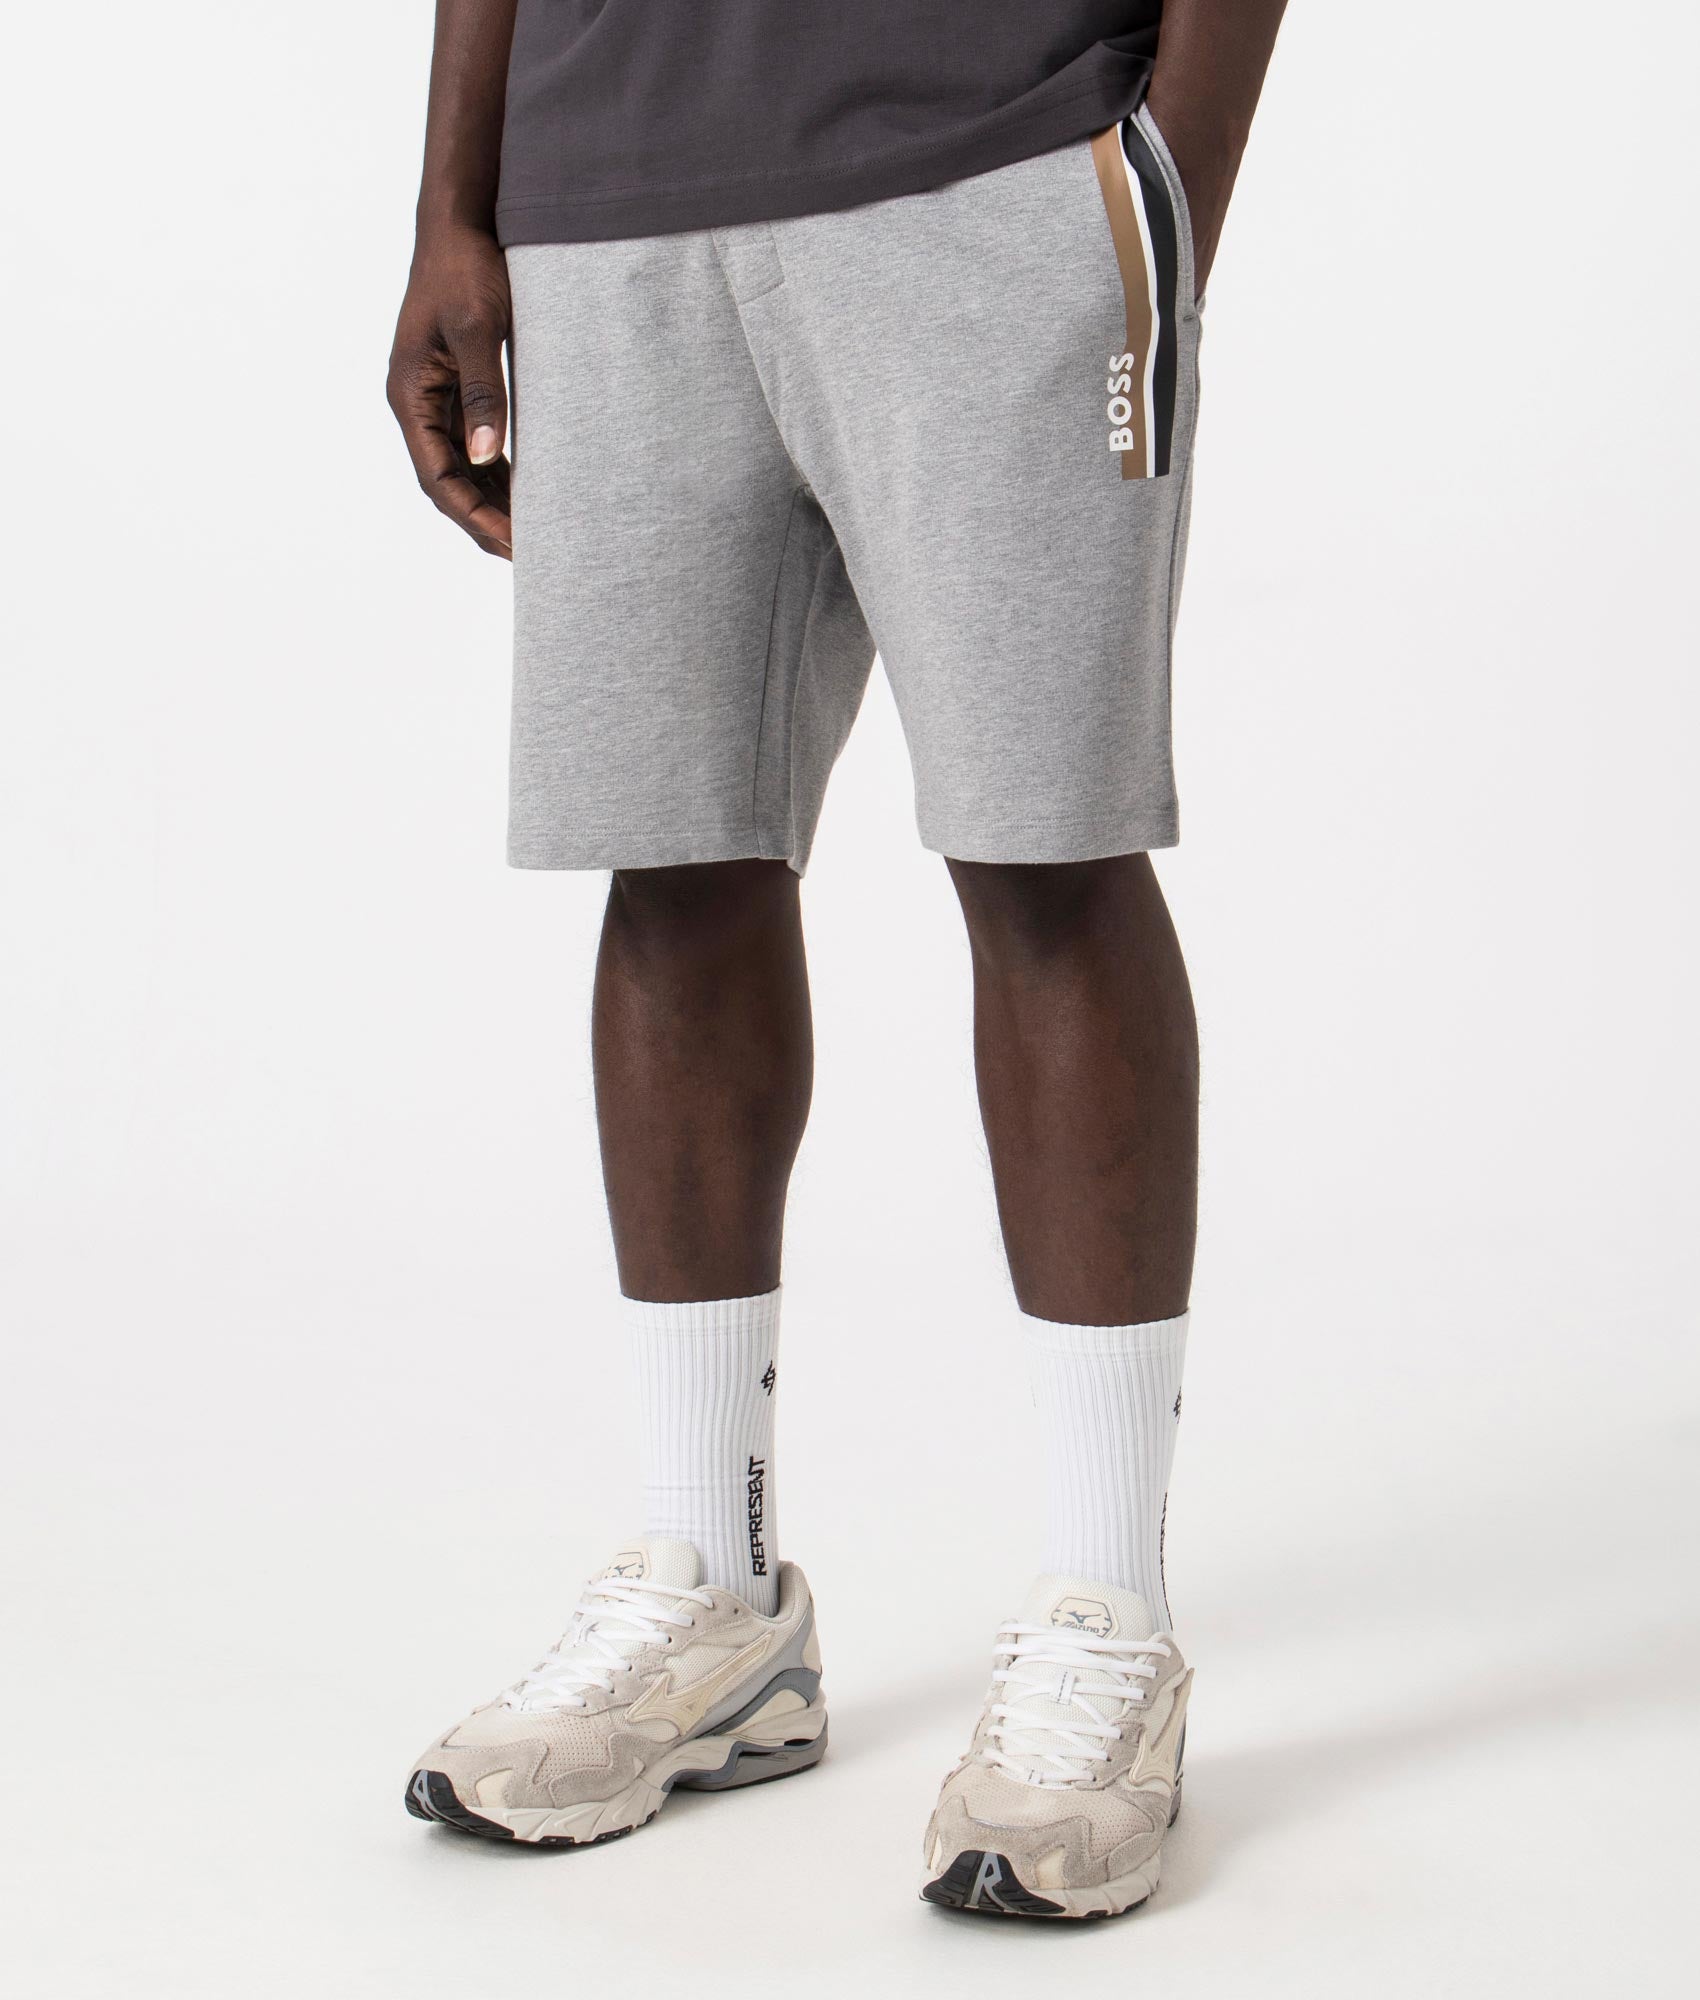 BOSS Mens Authentic Shorts - Colour: 033 Medium Grey - Size: Medium